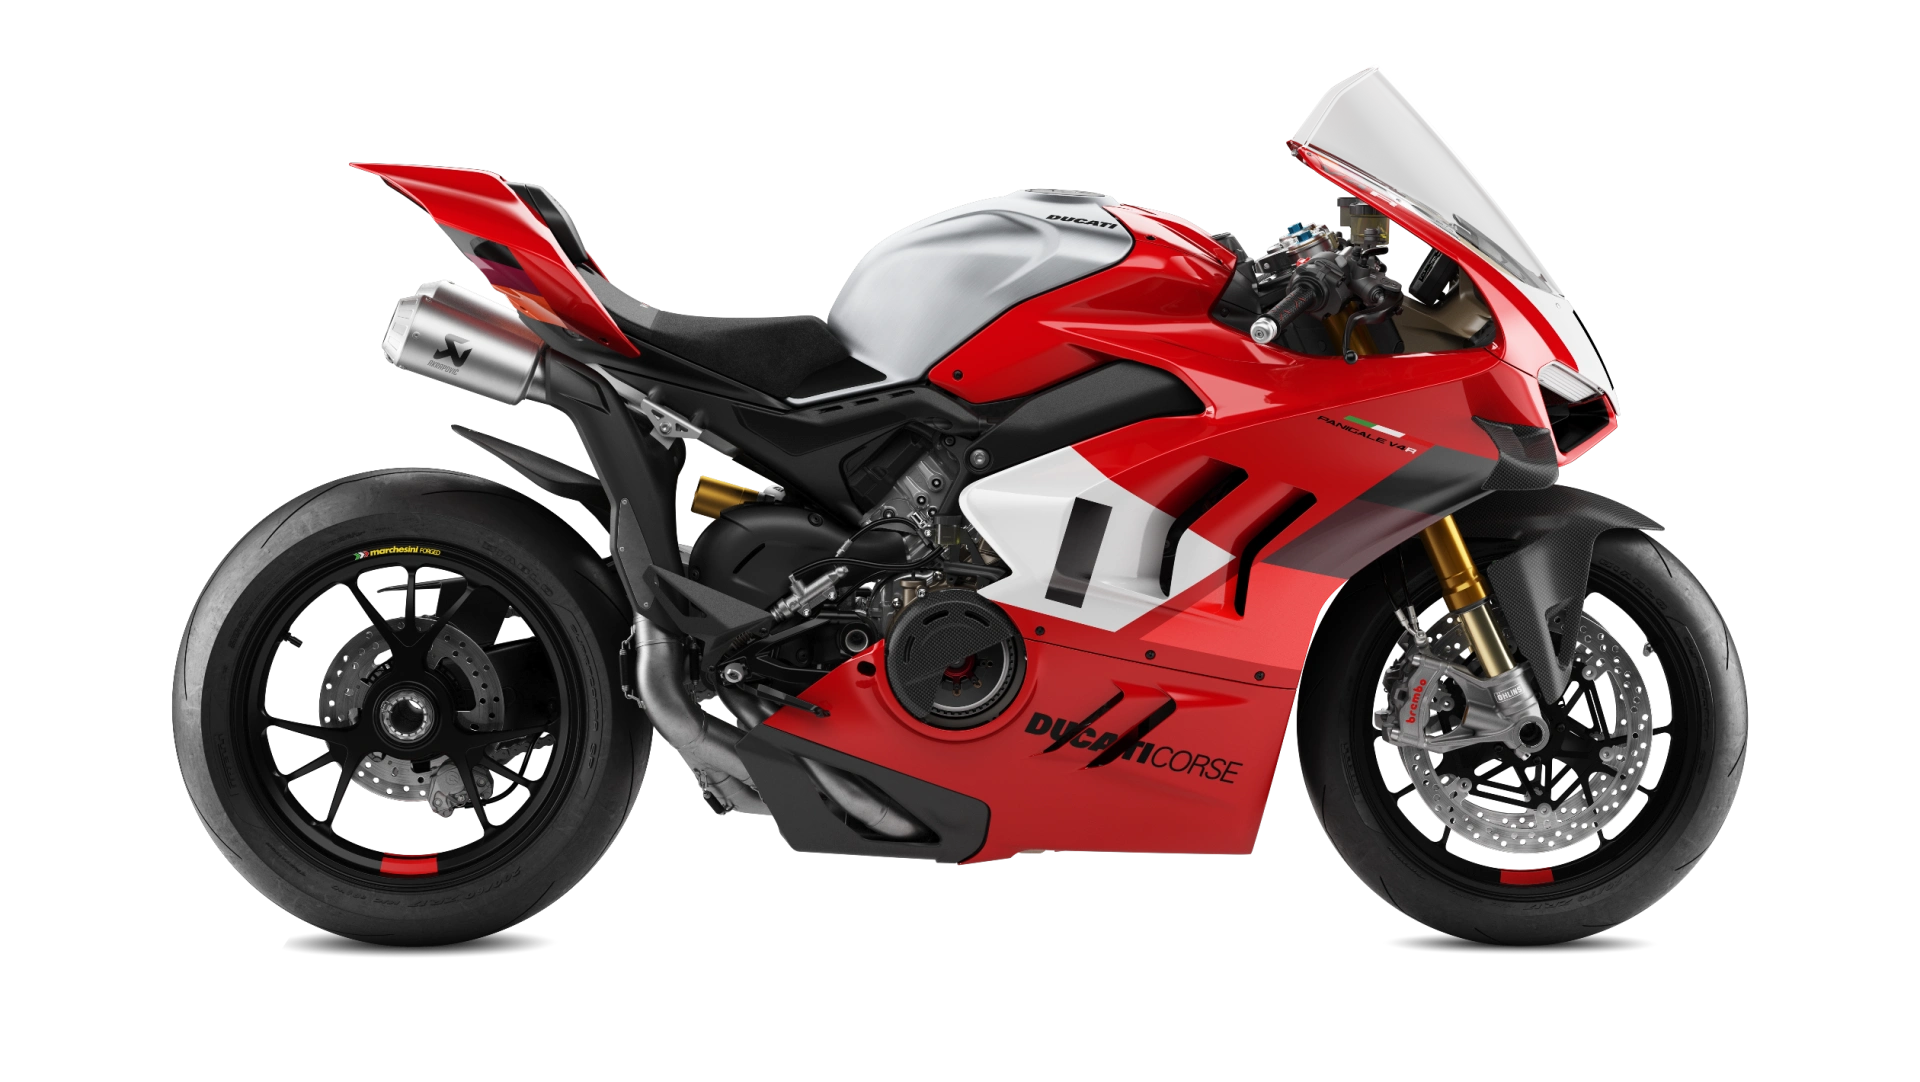 Nueva Panigale V4 R Ducati - This is Racing